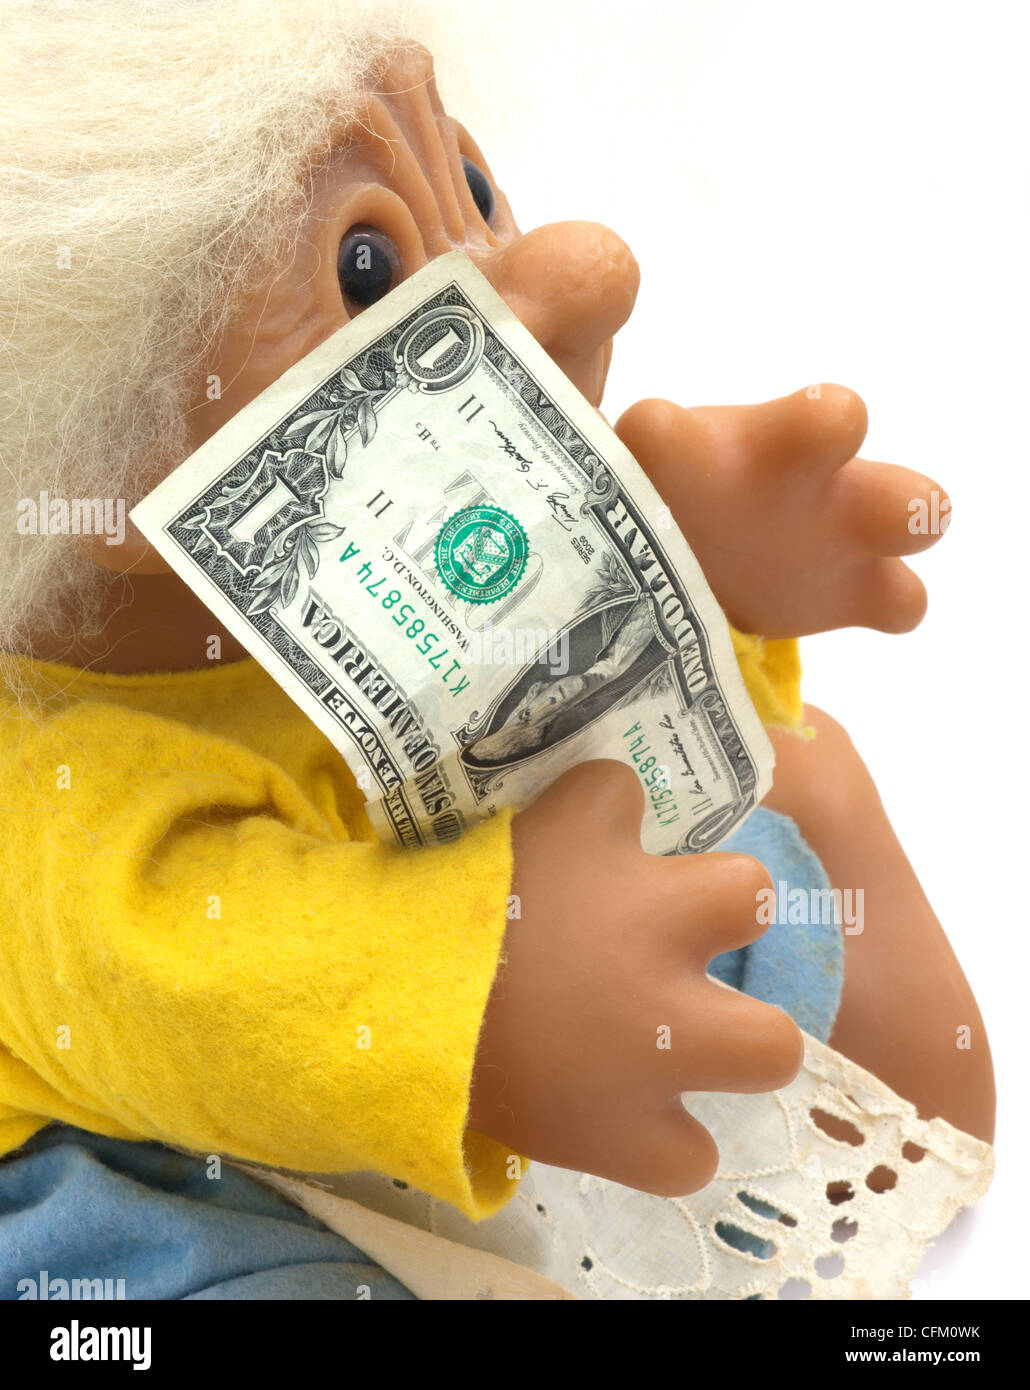 Grandma old doll person troll holding American dollar. Stock Photo